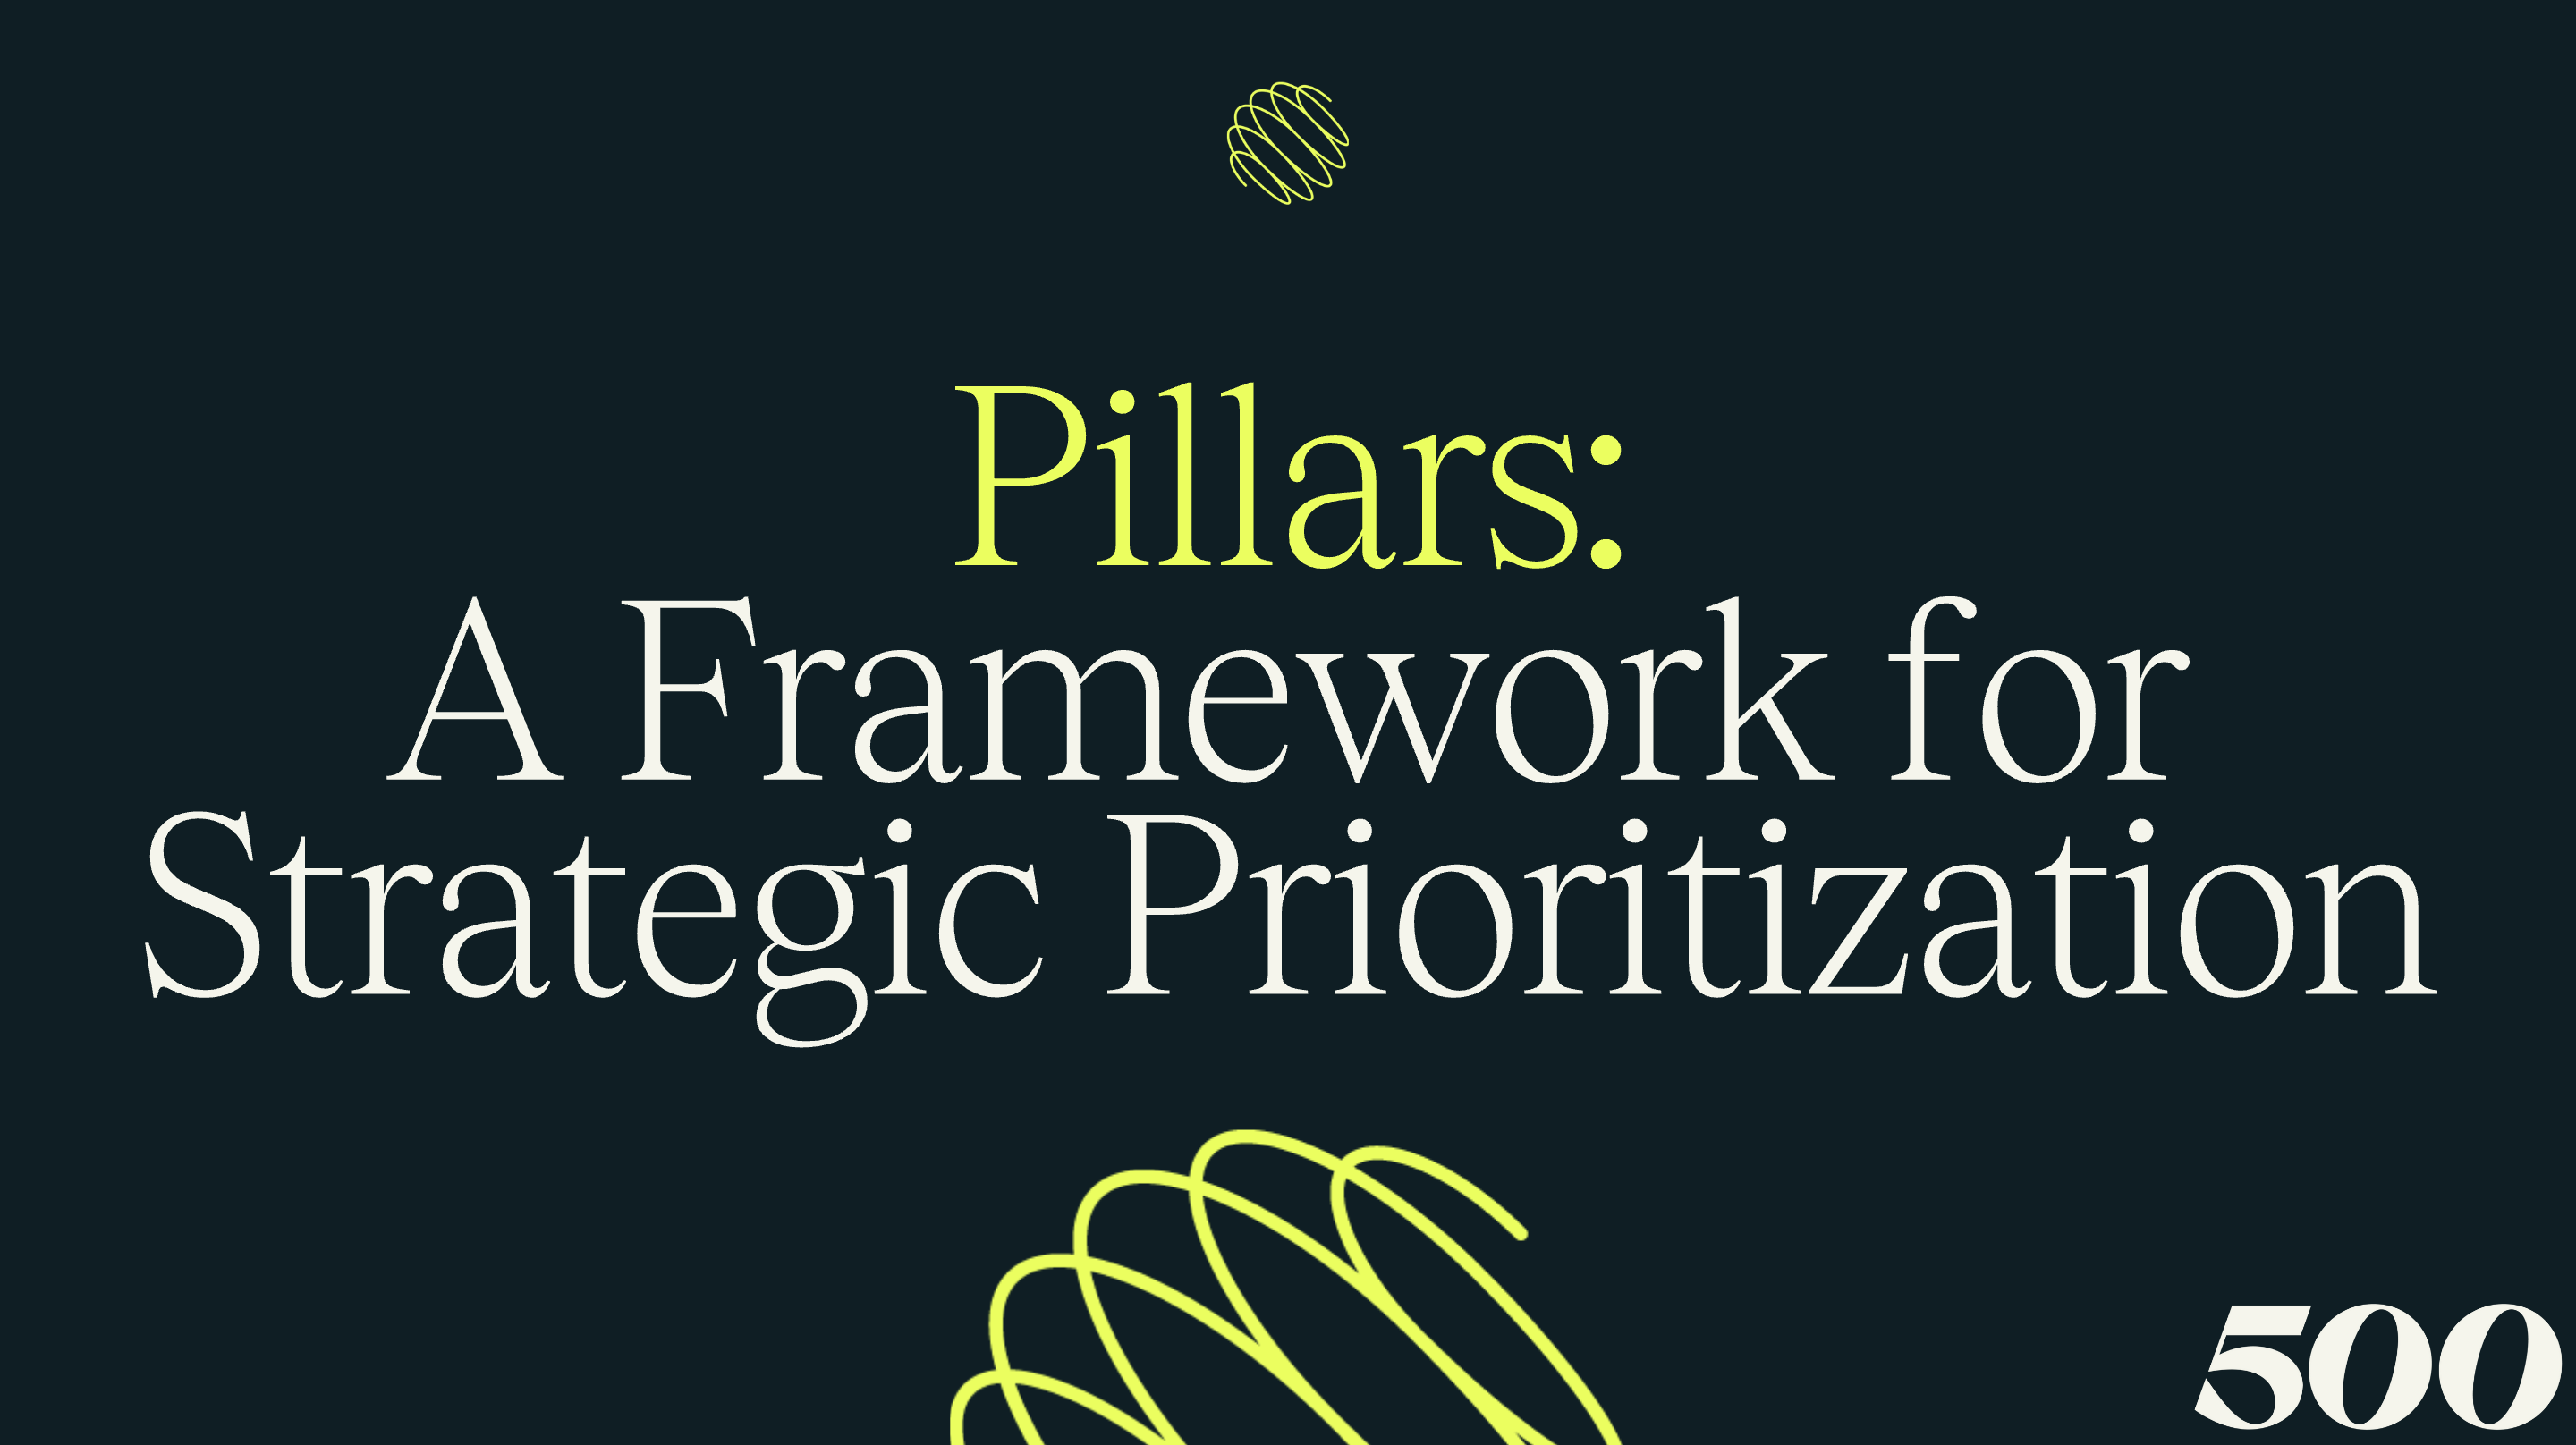 A Framework for Strategic Prioritization